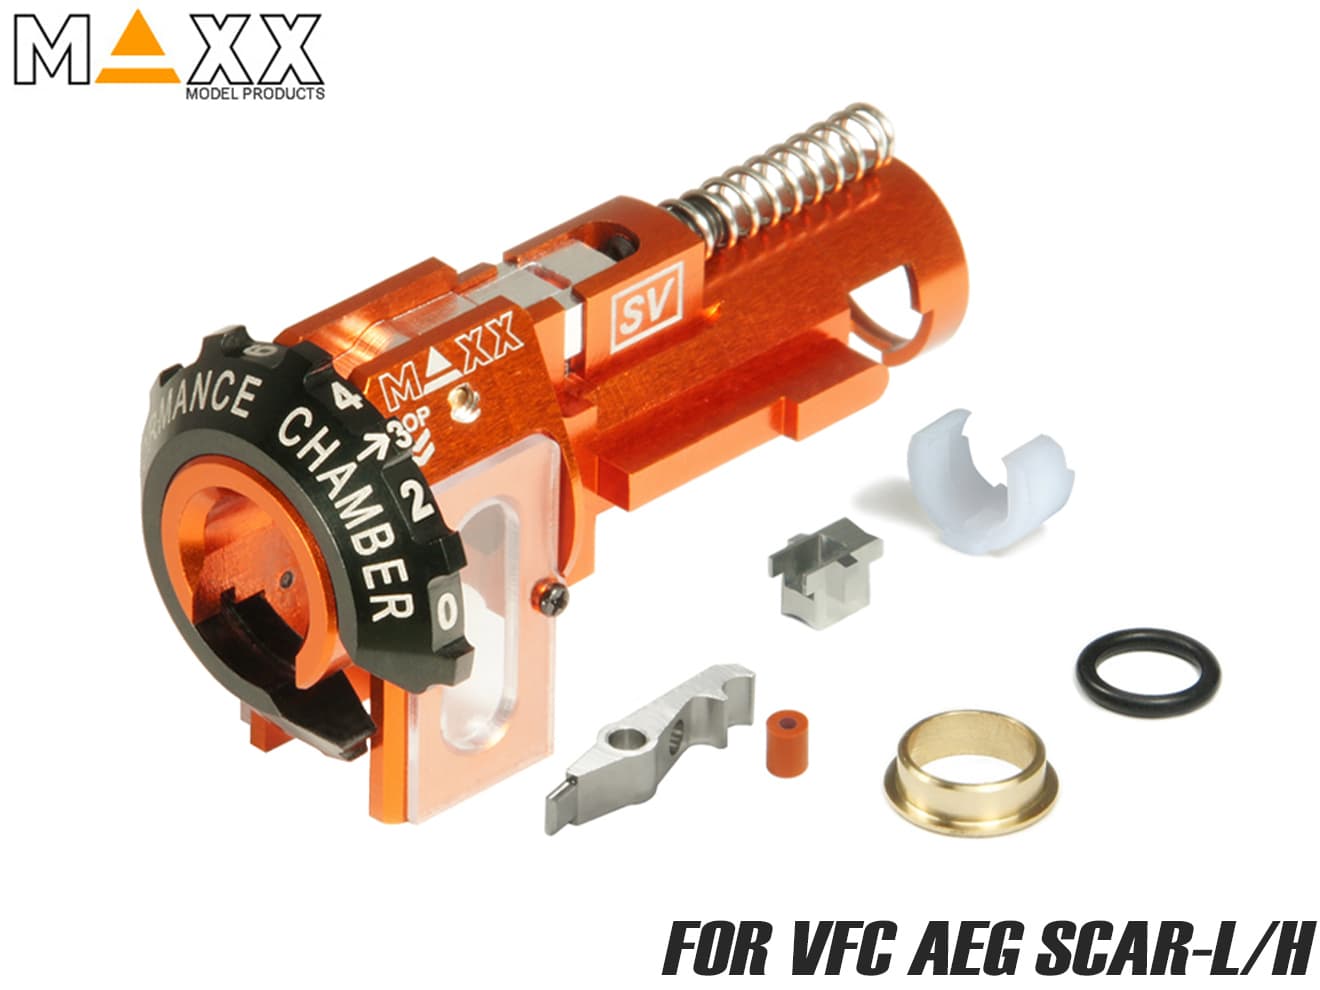 MAXX アルミCNC ホップアップチャンバー SV for AEG VFC SCAR-L/H◆VFC 電動ガン SCAR-L SCAR-H対応 LEDモジュール装着可能 A6061製